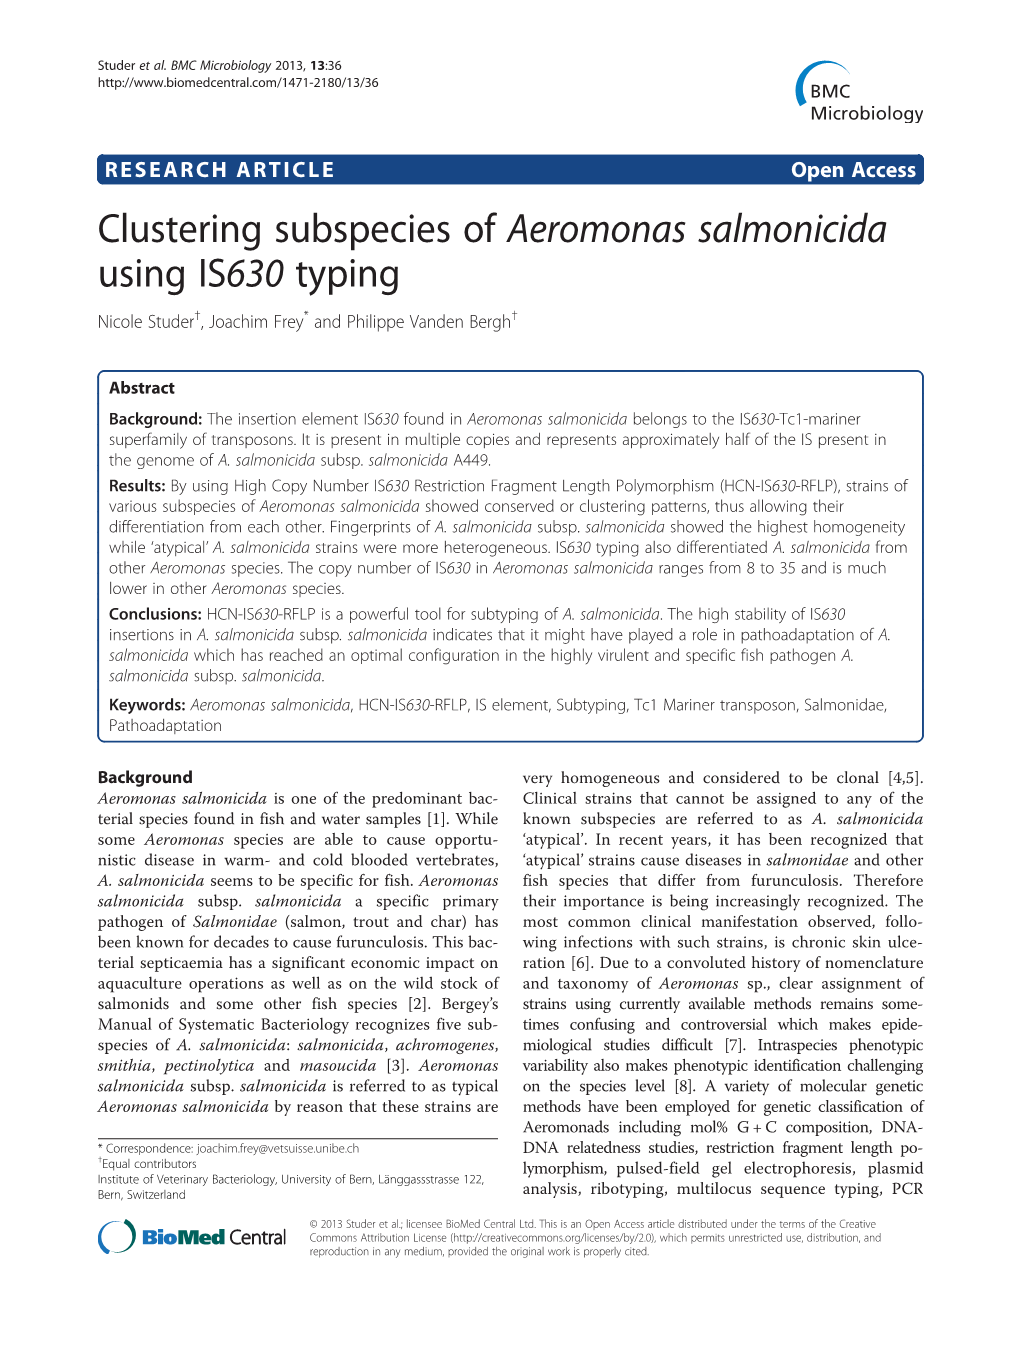 Clustering Subspecies of Aeromonas Salmonicida Using IS630 Typing Nicole Studer†, Joachim Frey* and Philippe Vanden Bergh†